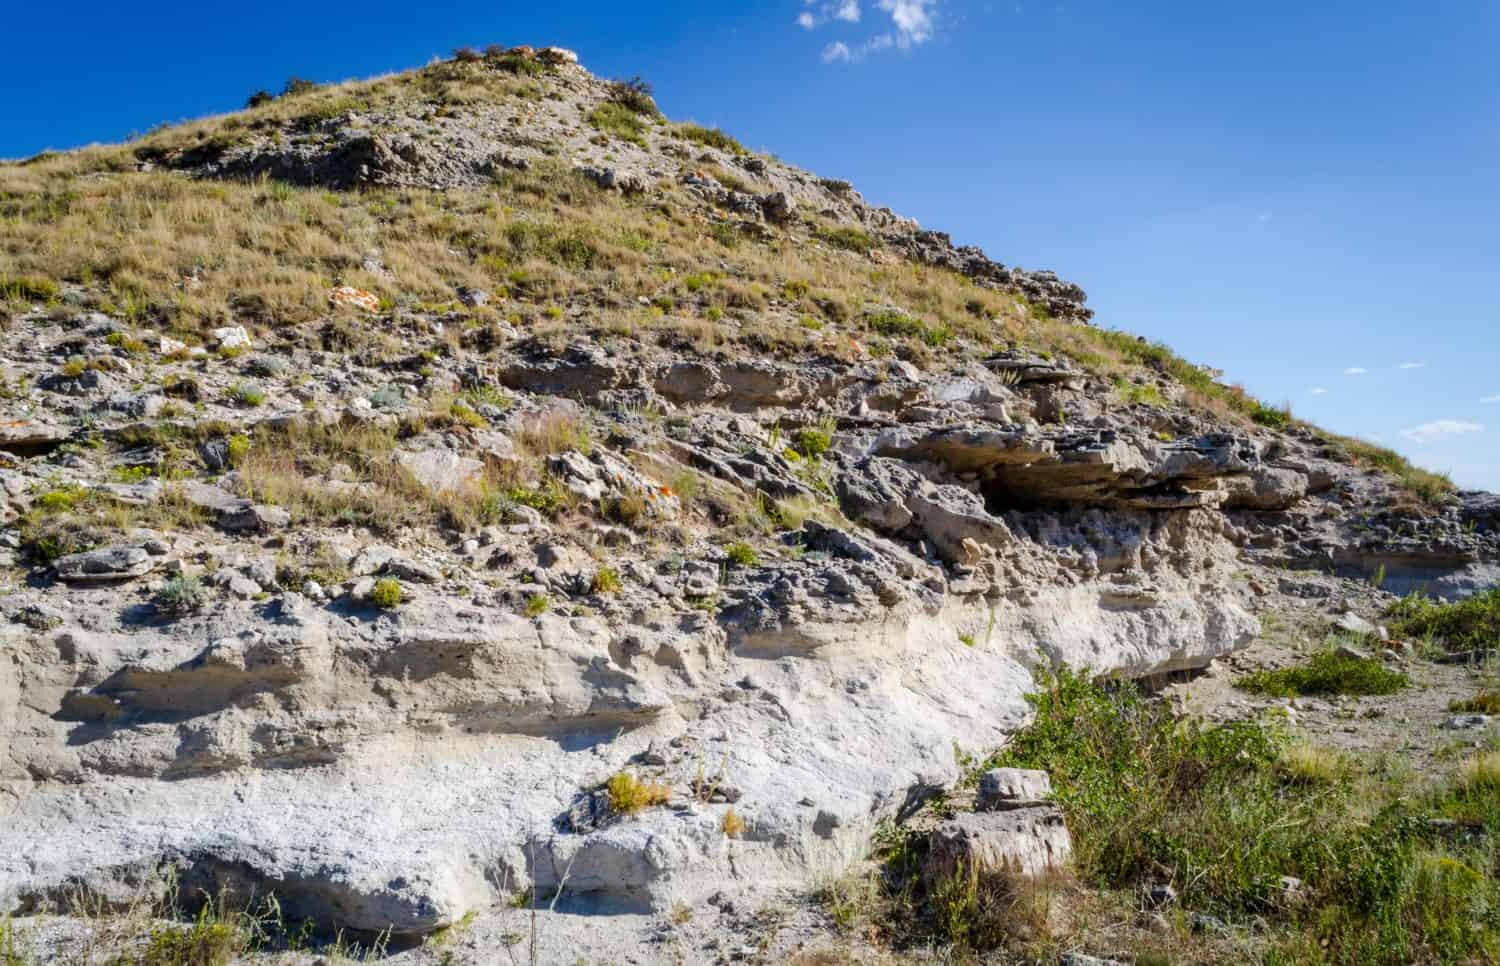 Agate Fossil Beds National Monument in Nebraska